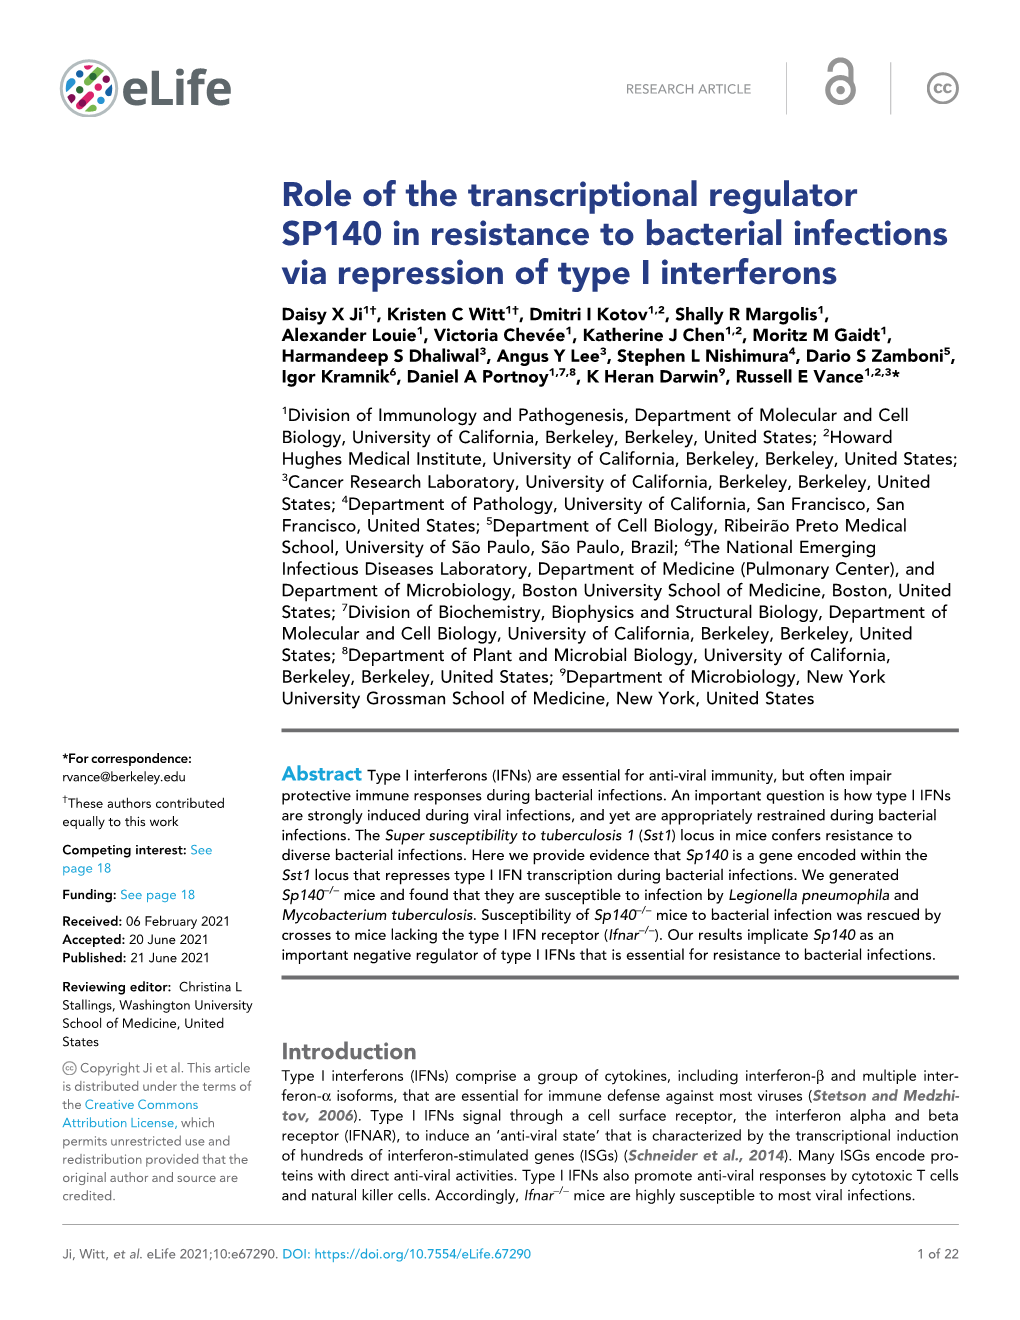 Role of the Transcriptional Regulator SP140 in Resistance